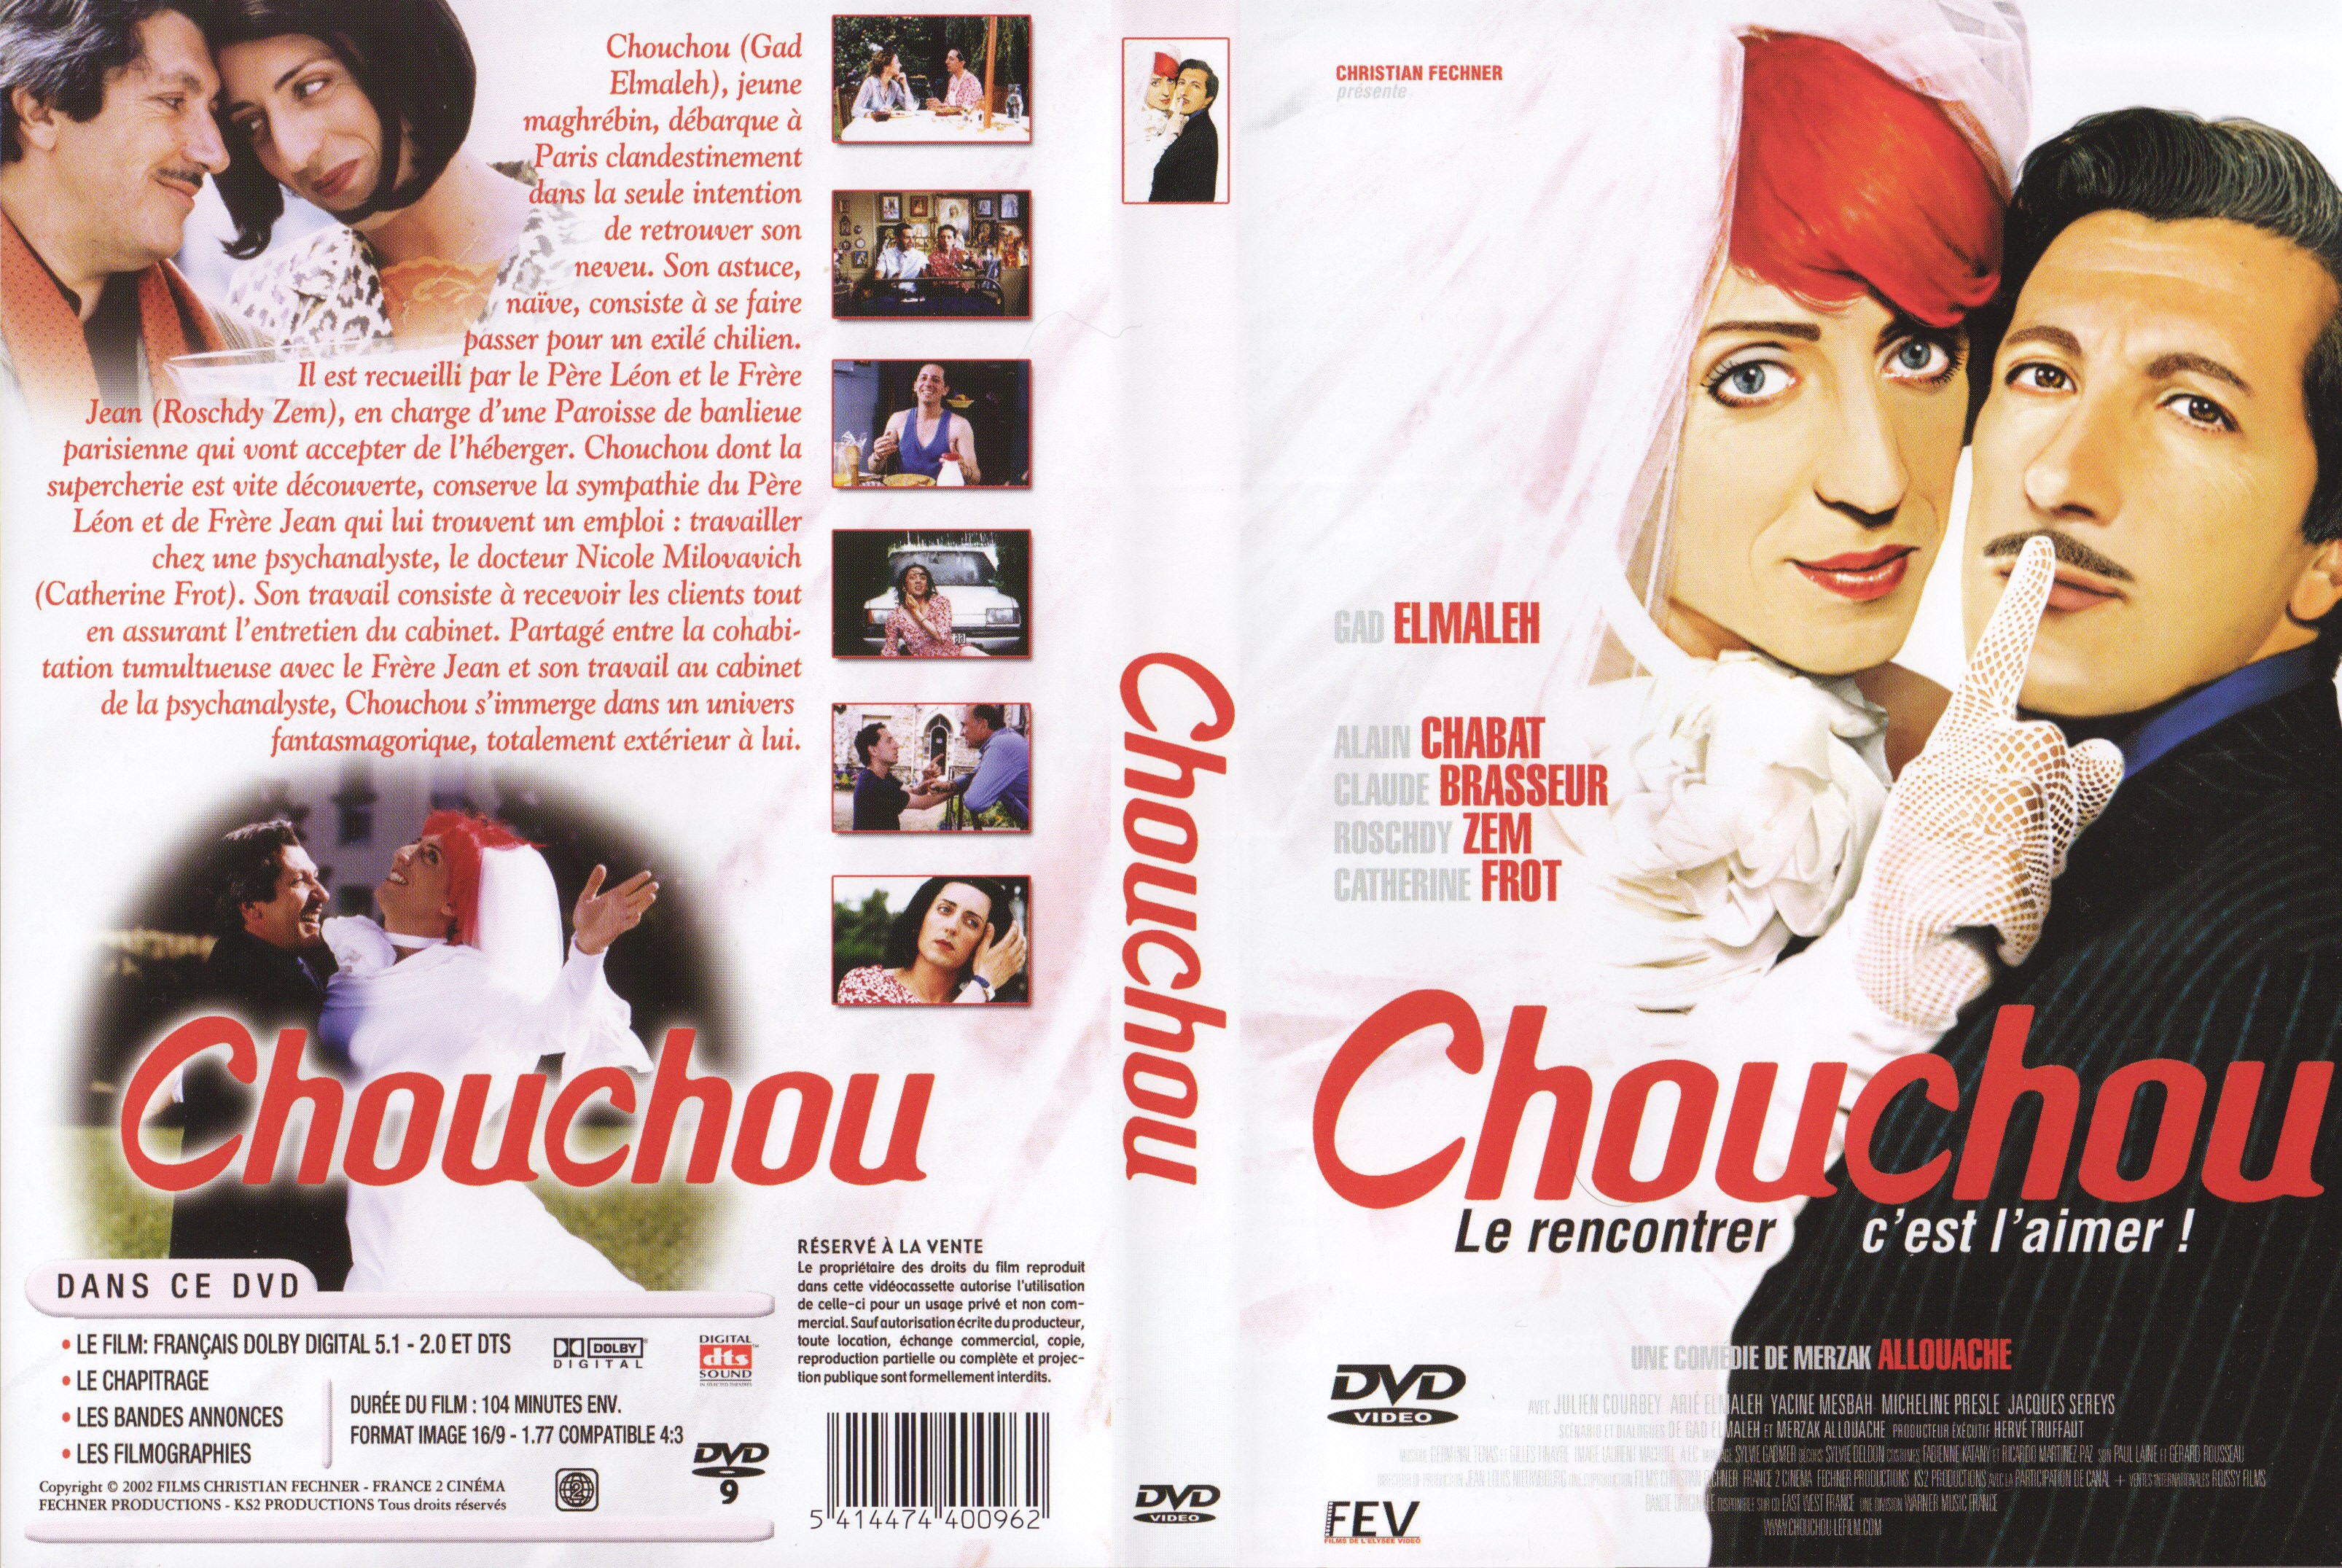 Jaquette DVD Chouchou v2